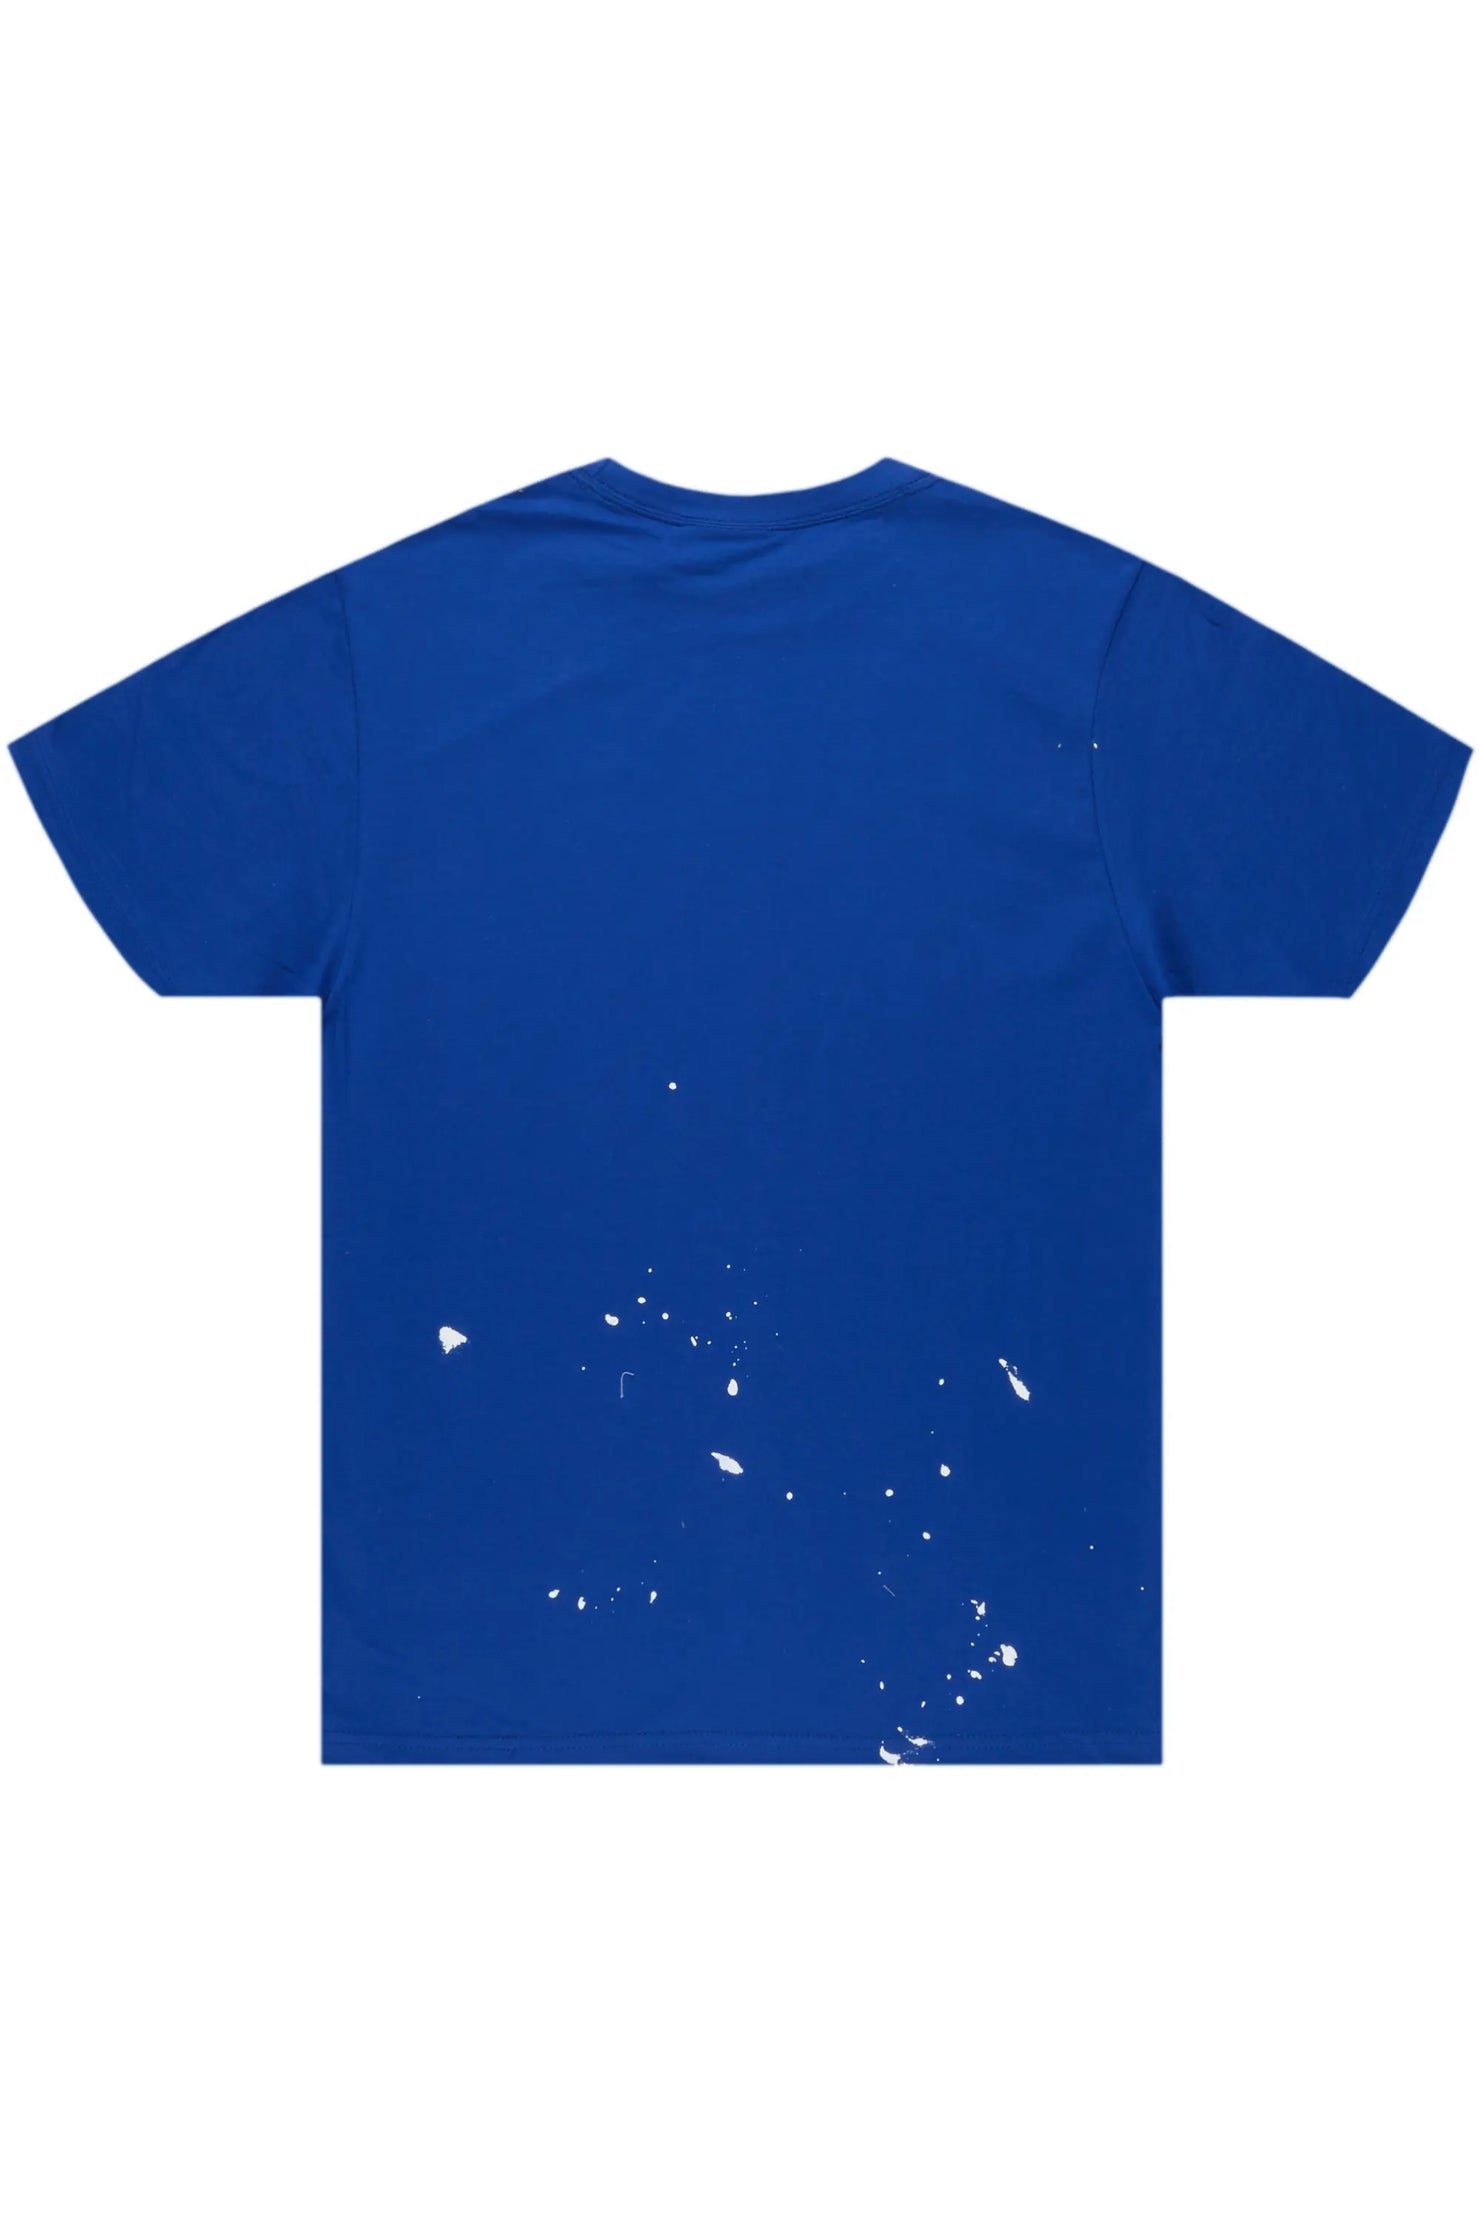 Raffer Royal Blue Graphic T-Shirt